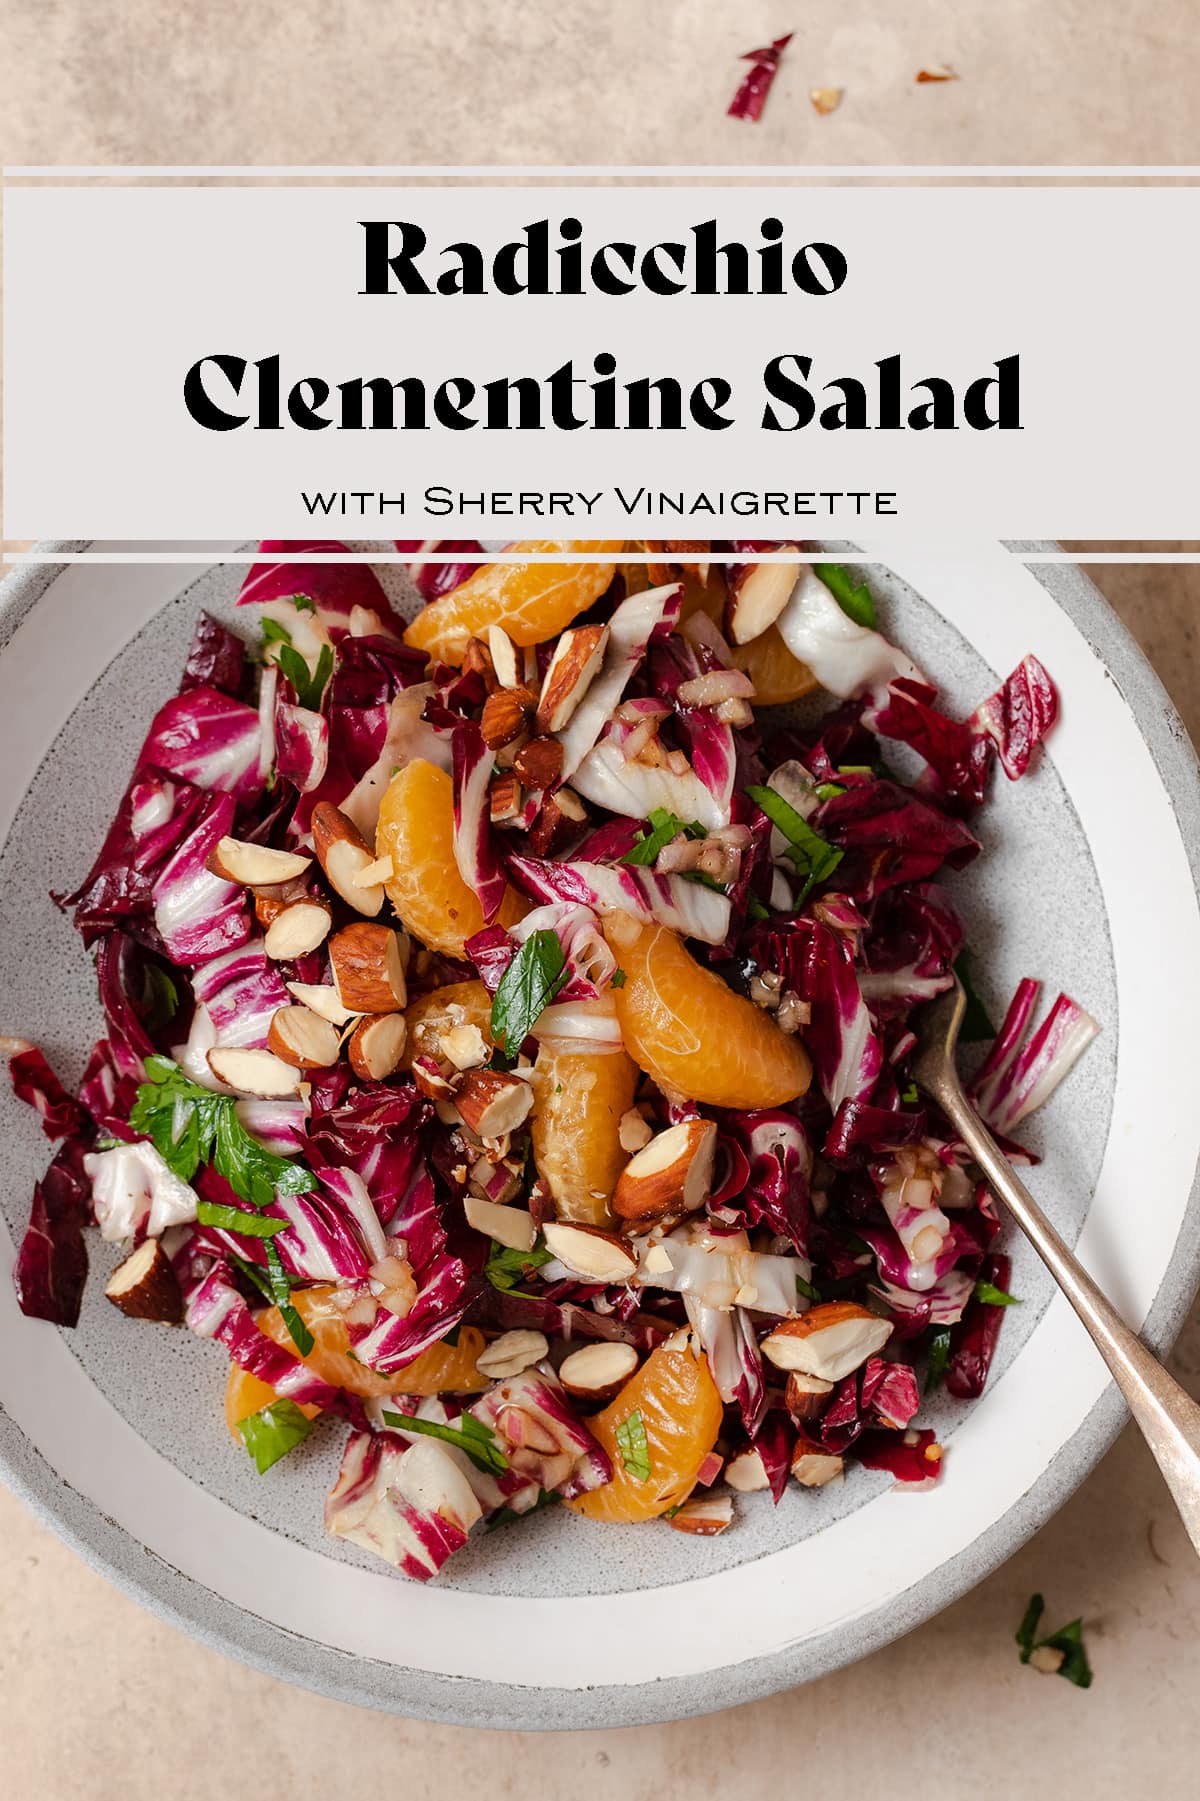 Radicchio Clementine Salad with Sherry Vinaigrette